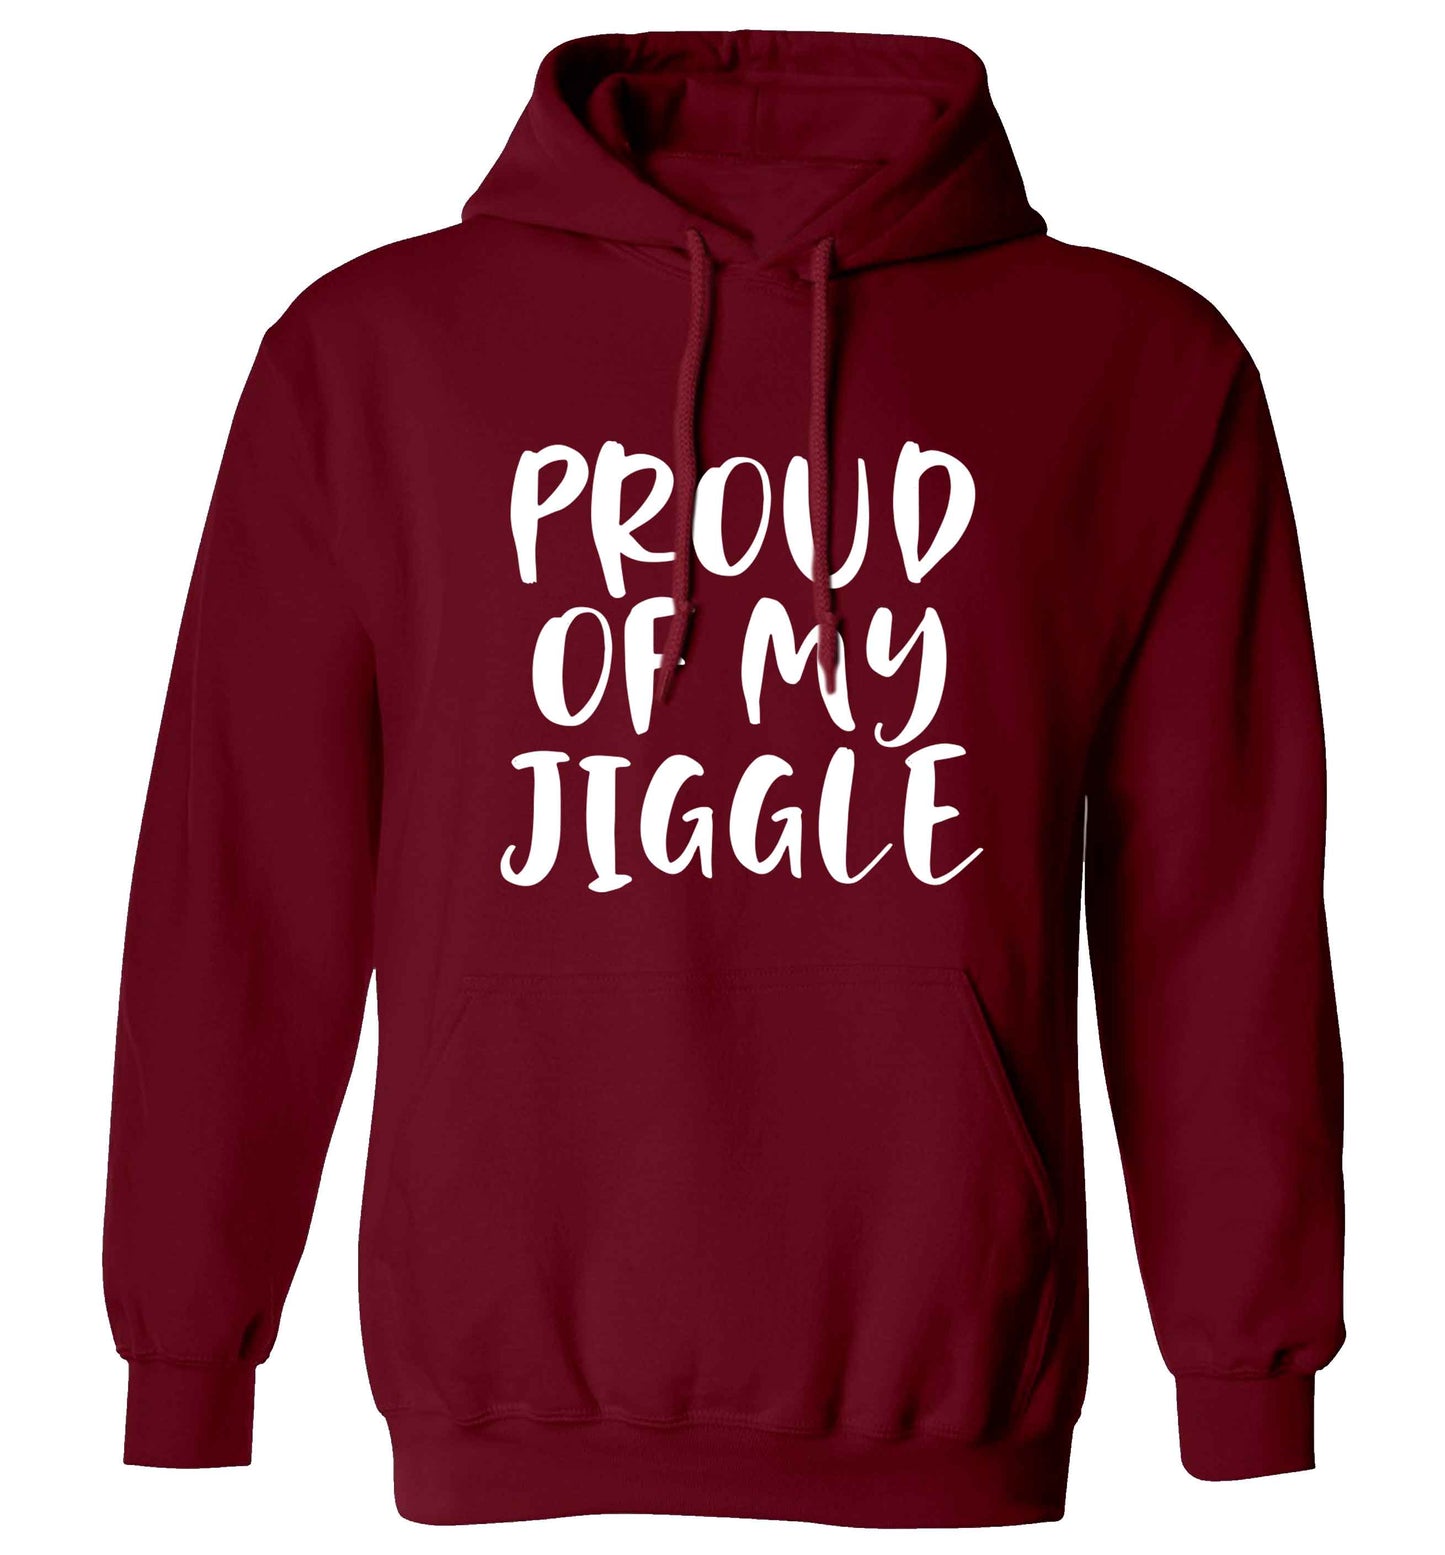 Proud of my jiggle adults unisex maroon hoodie 2XL